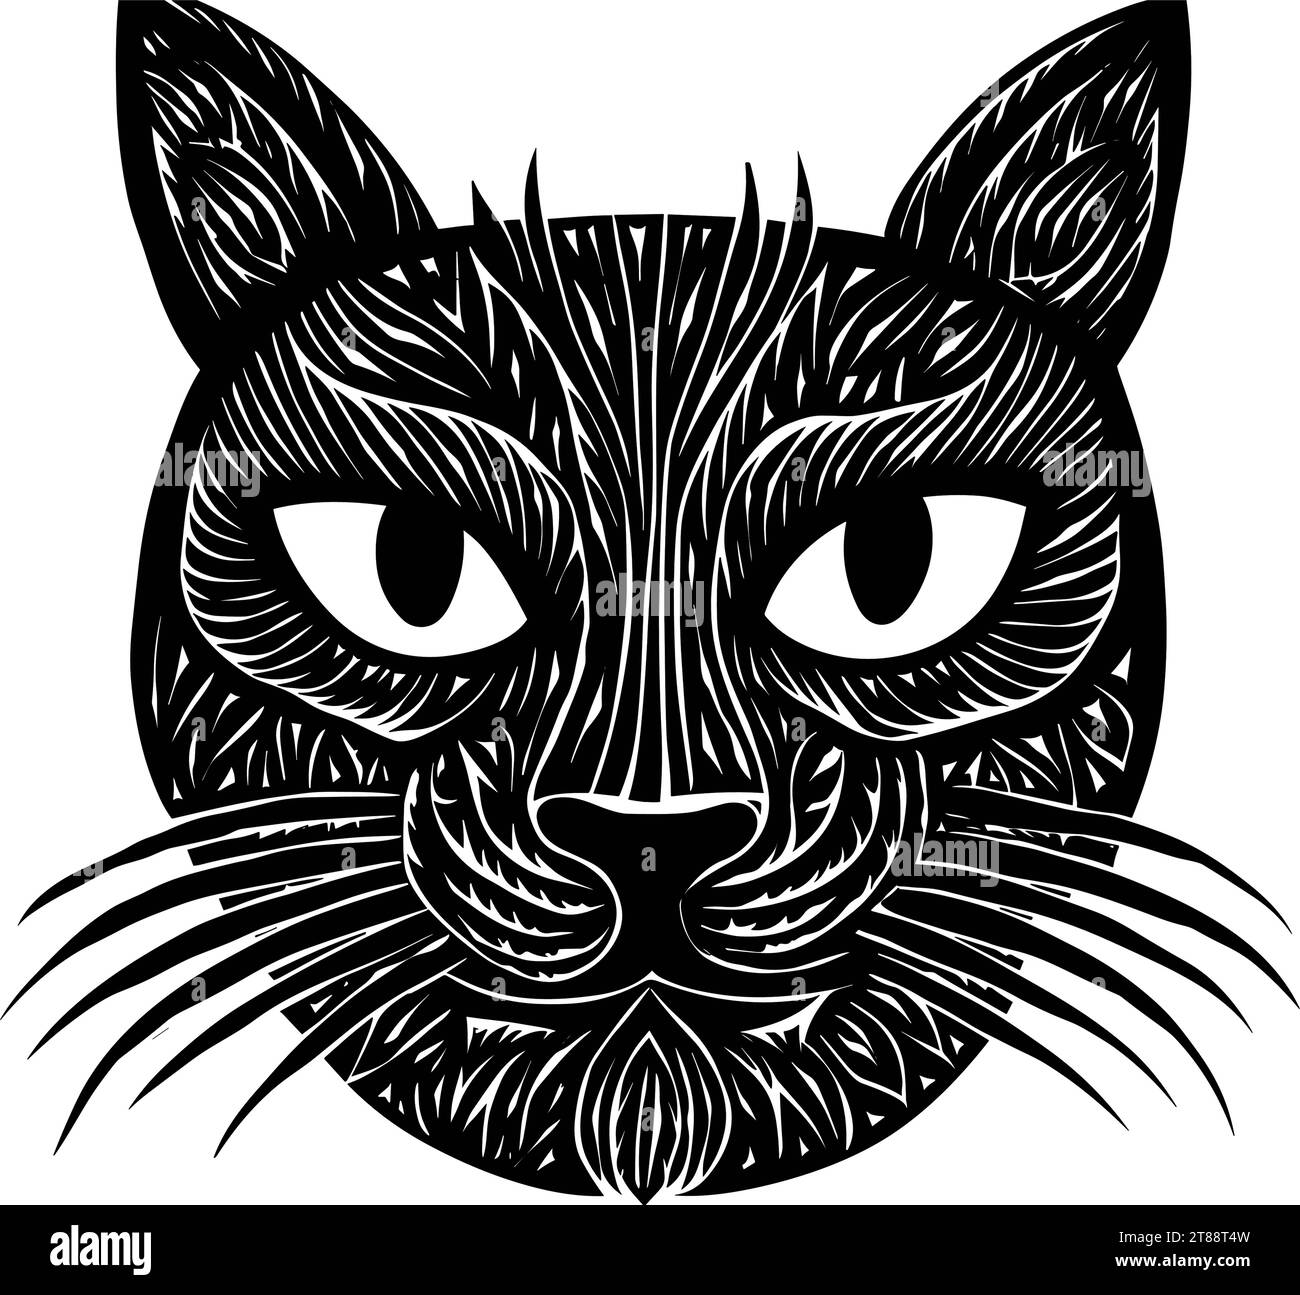 Domestic cat shape icon Animal Kingdom icon Cat icon png download